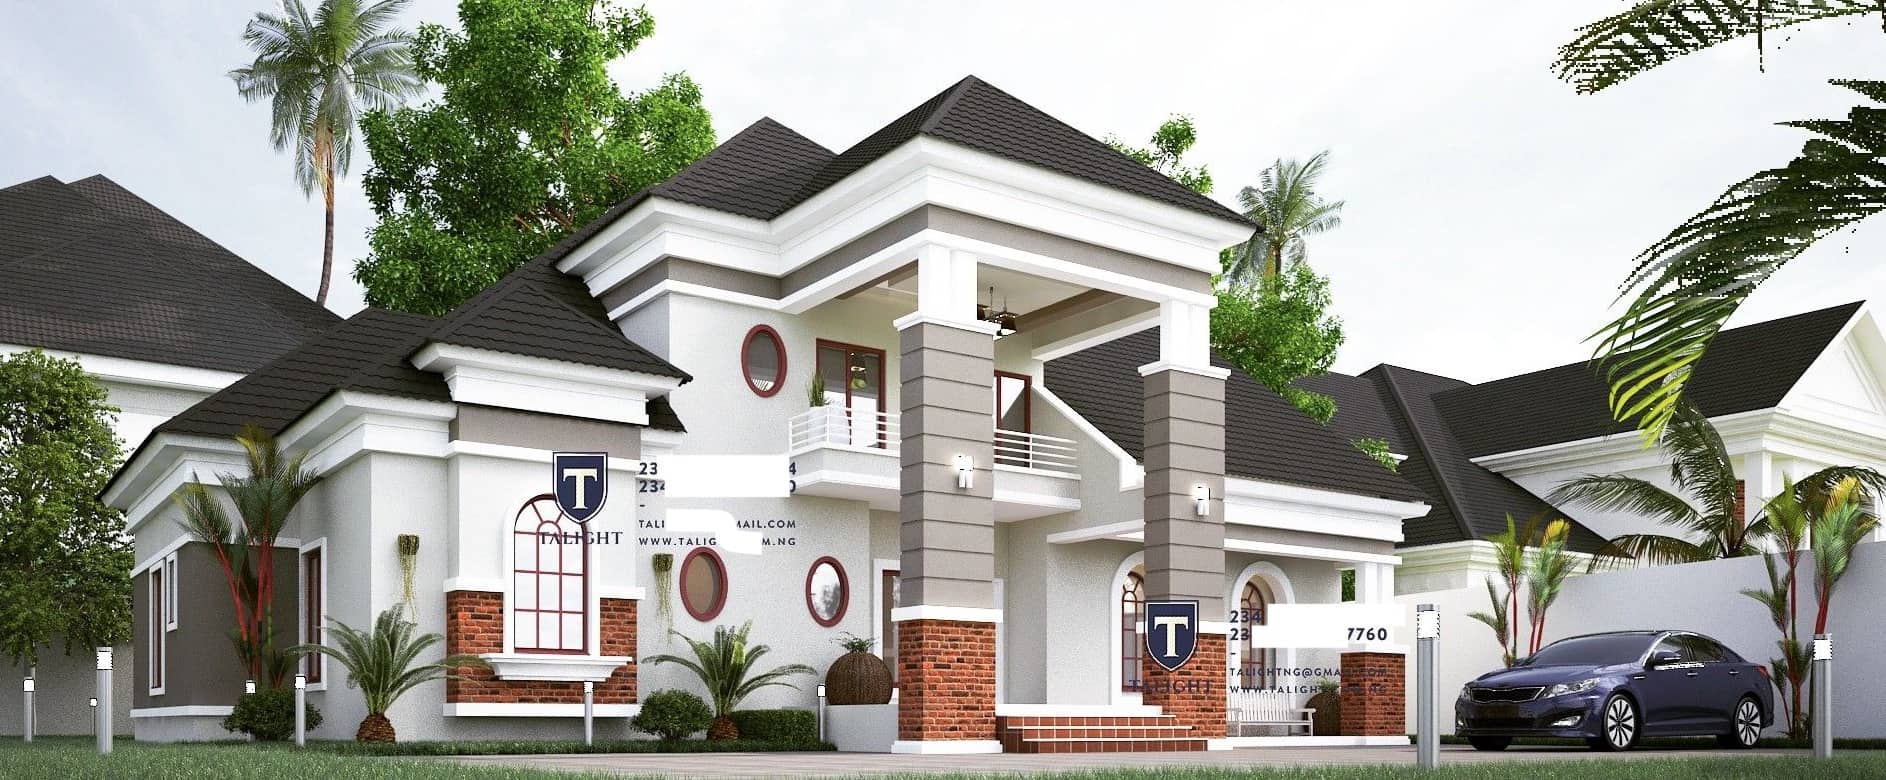 penthouse designs in nigeria 9